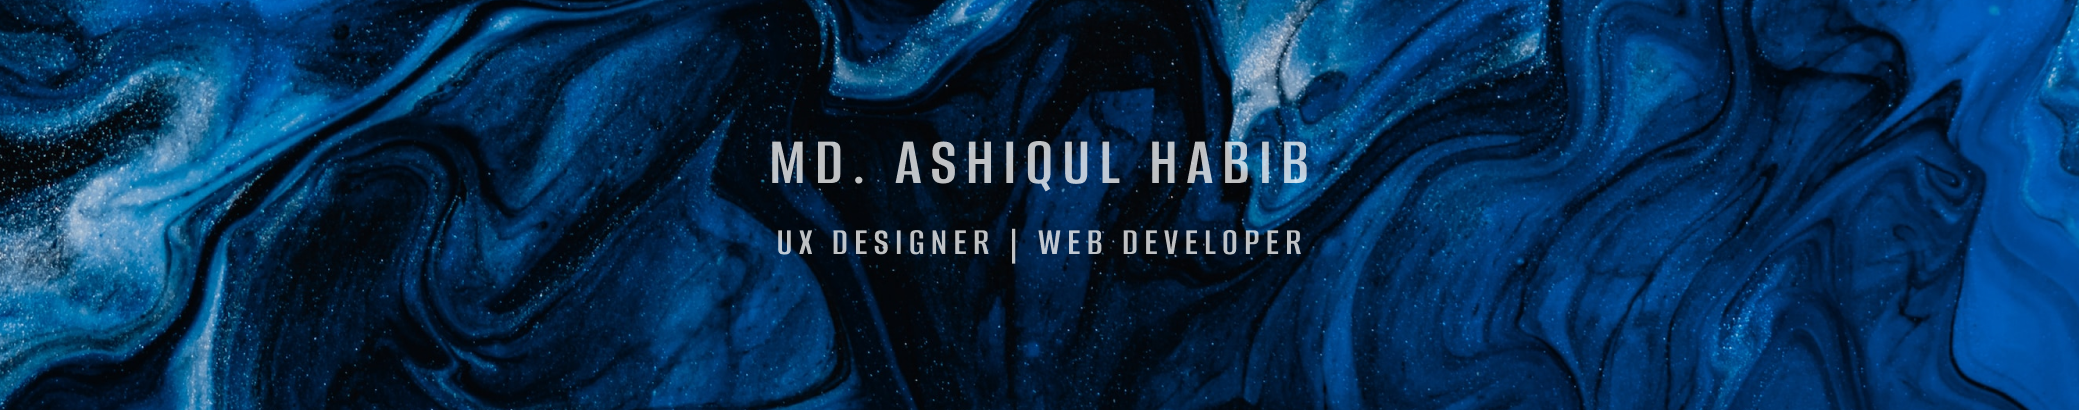 Md. Ashiqul Habib's profile banner